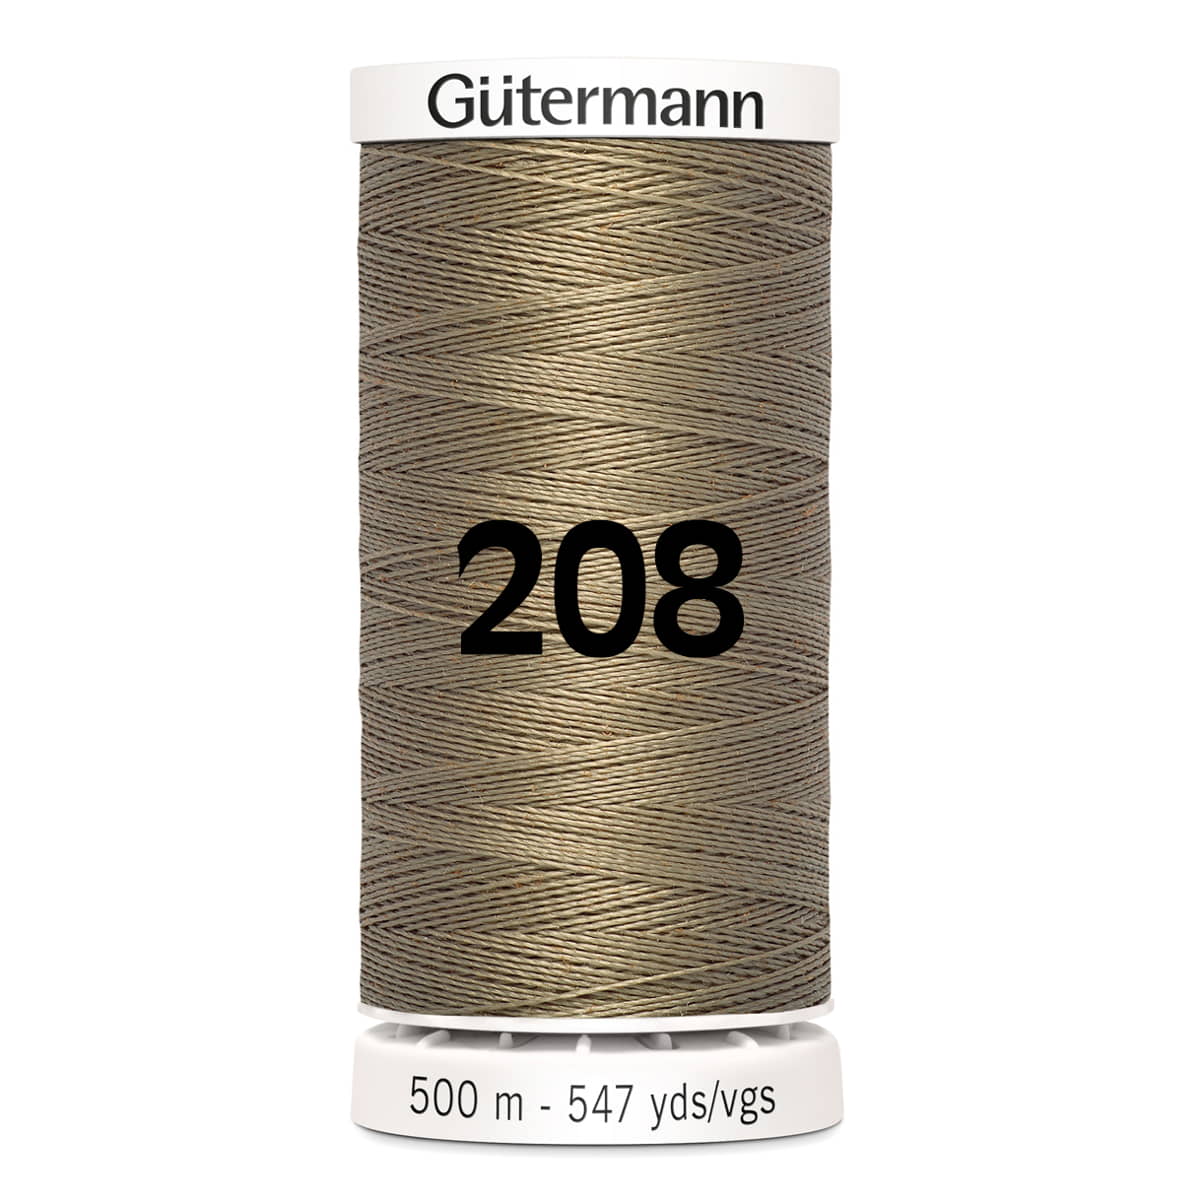 Gutermann garen | 500m | 208 donker beige naaigaren GM-500-208-DONKER-BEIGE 4008015036263